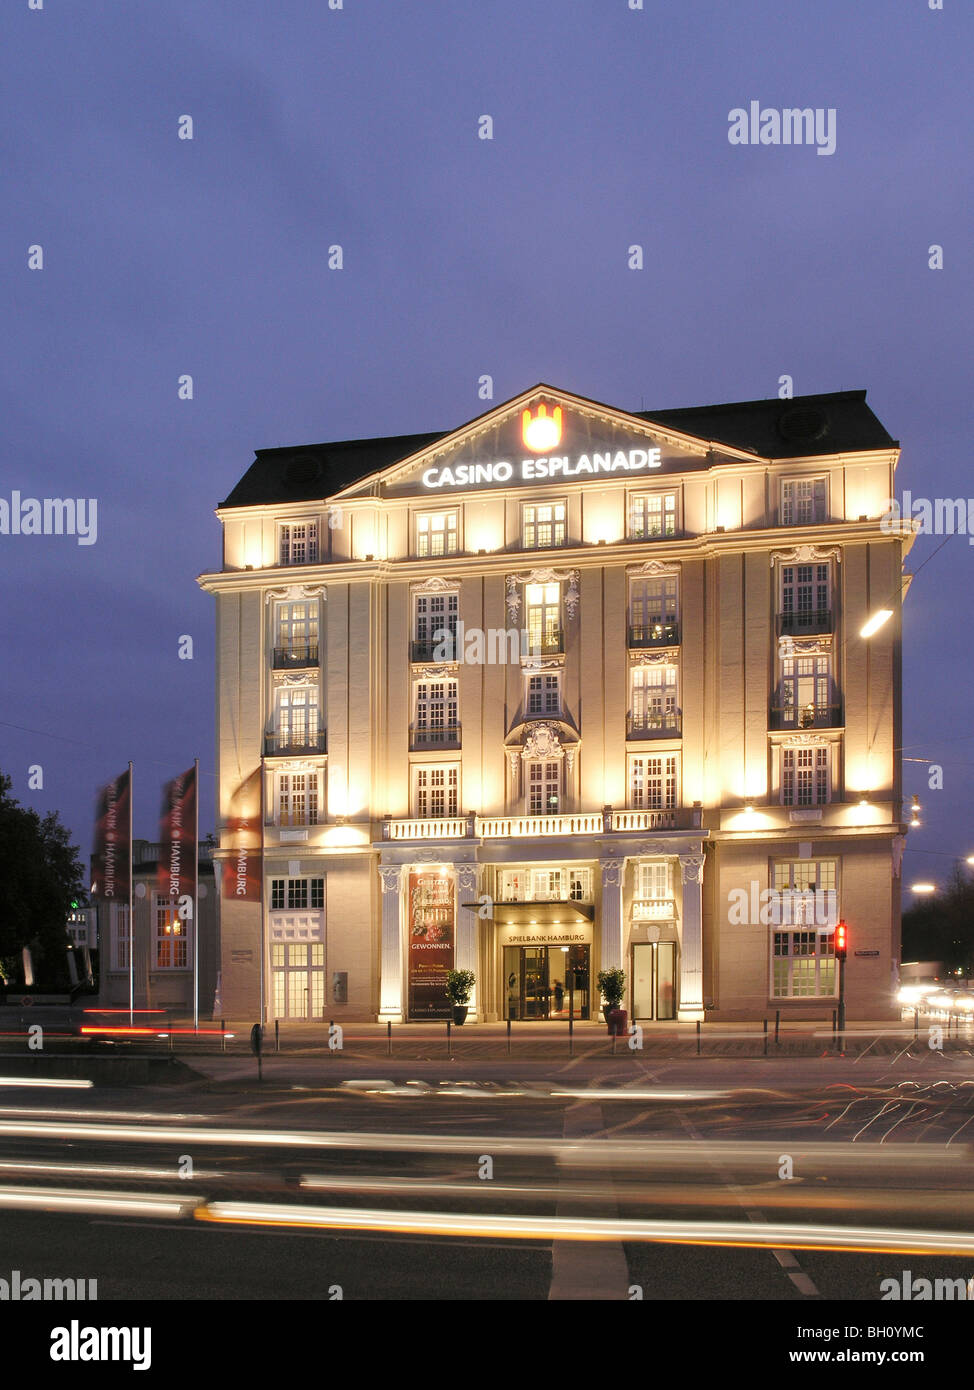 Casino hamburg hi-res stock photography and images - Alamy